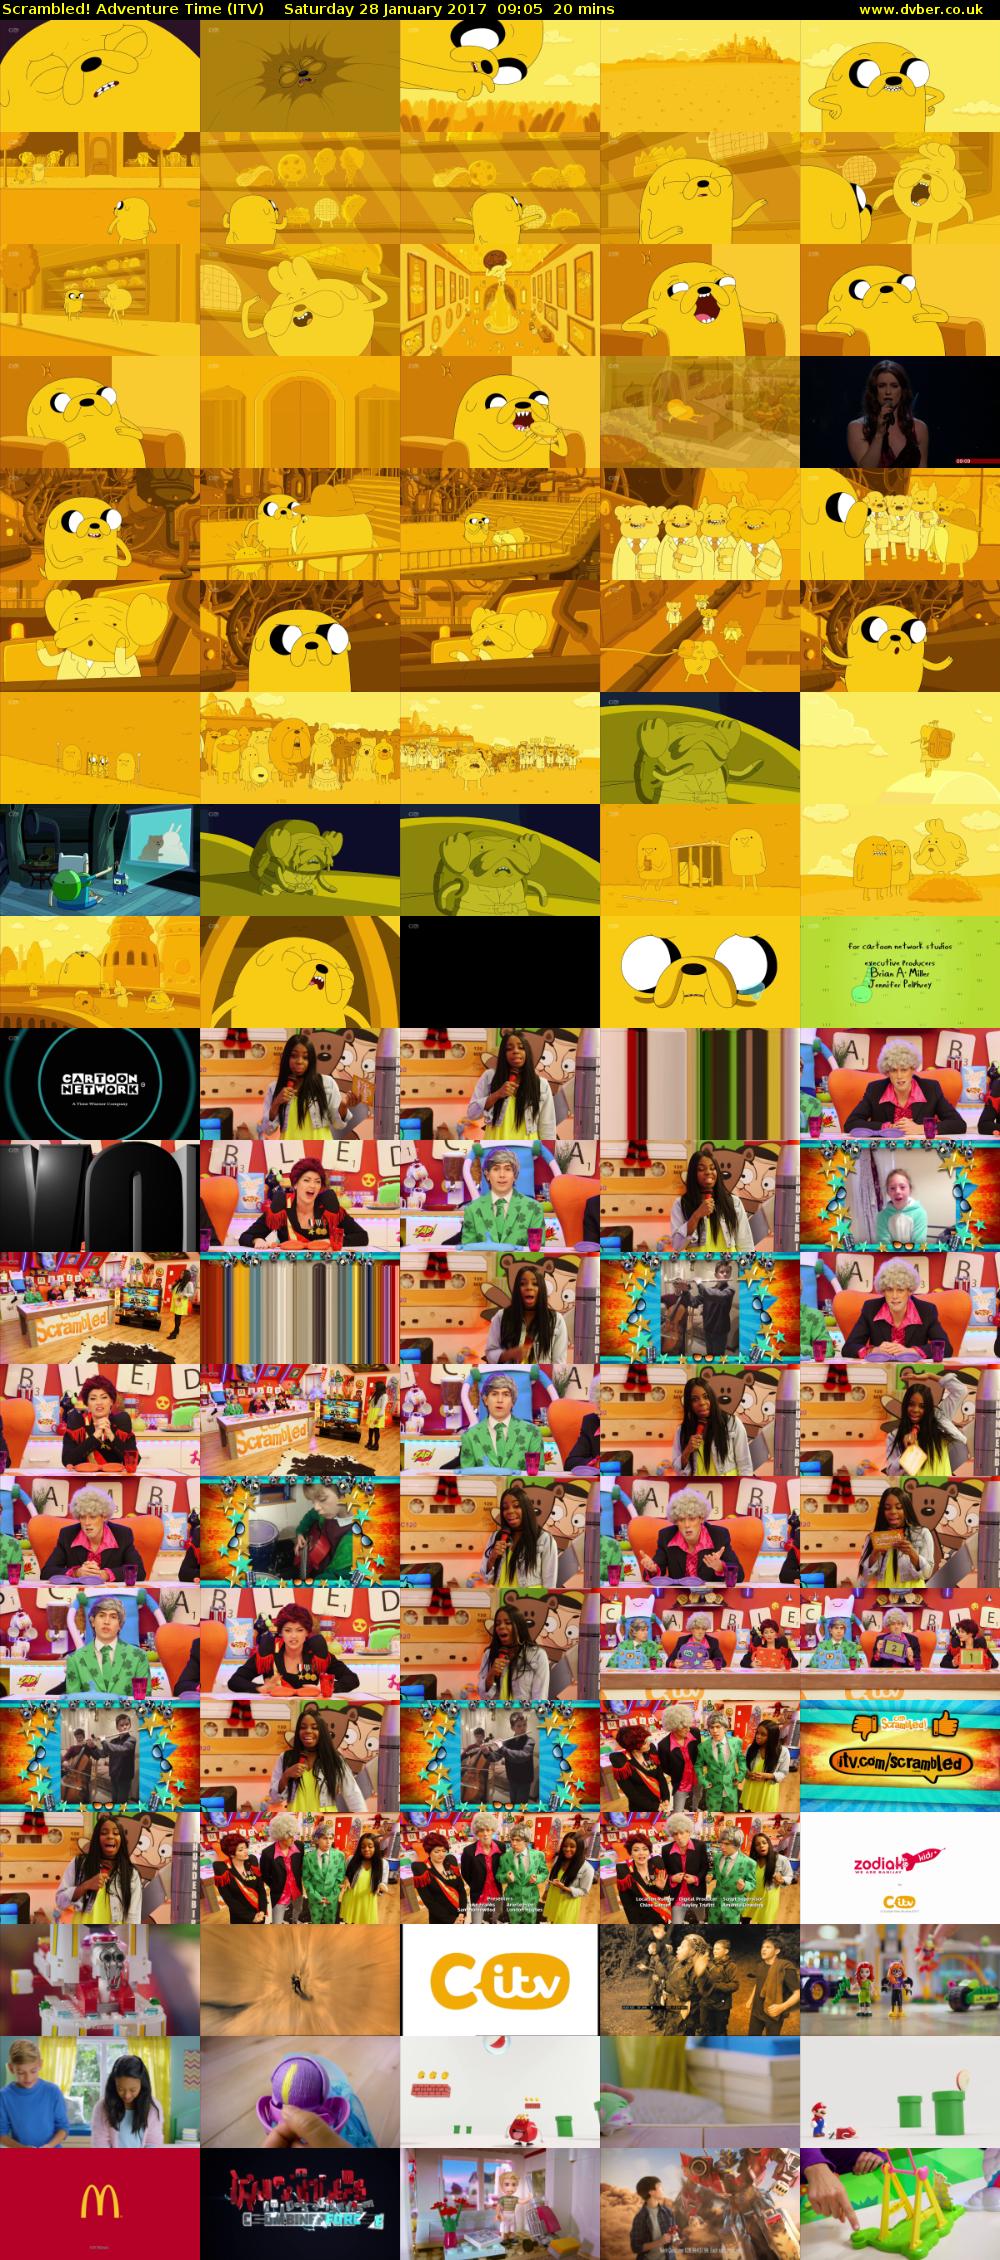 Scrambled! Adventure Time (ITV) Saturday 28 January 2017 09:05 - 09:25